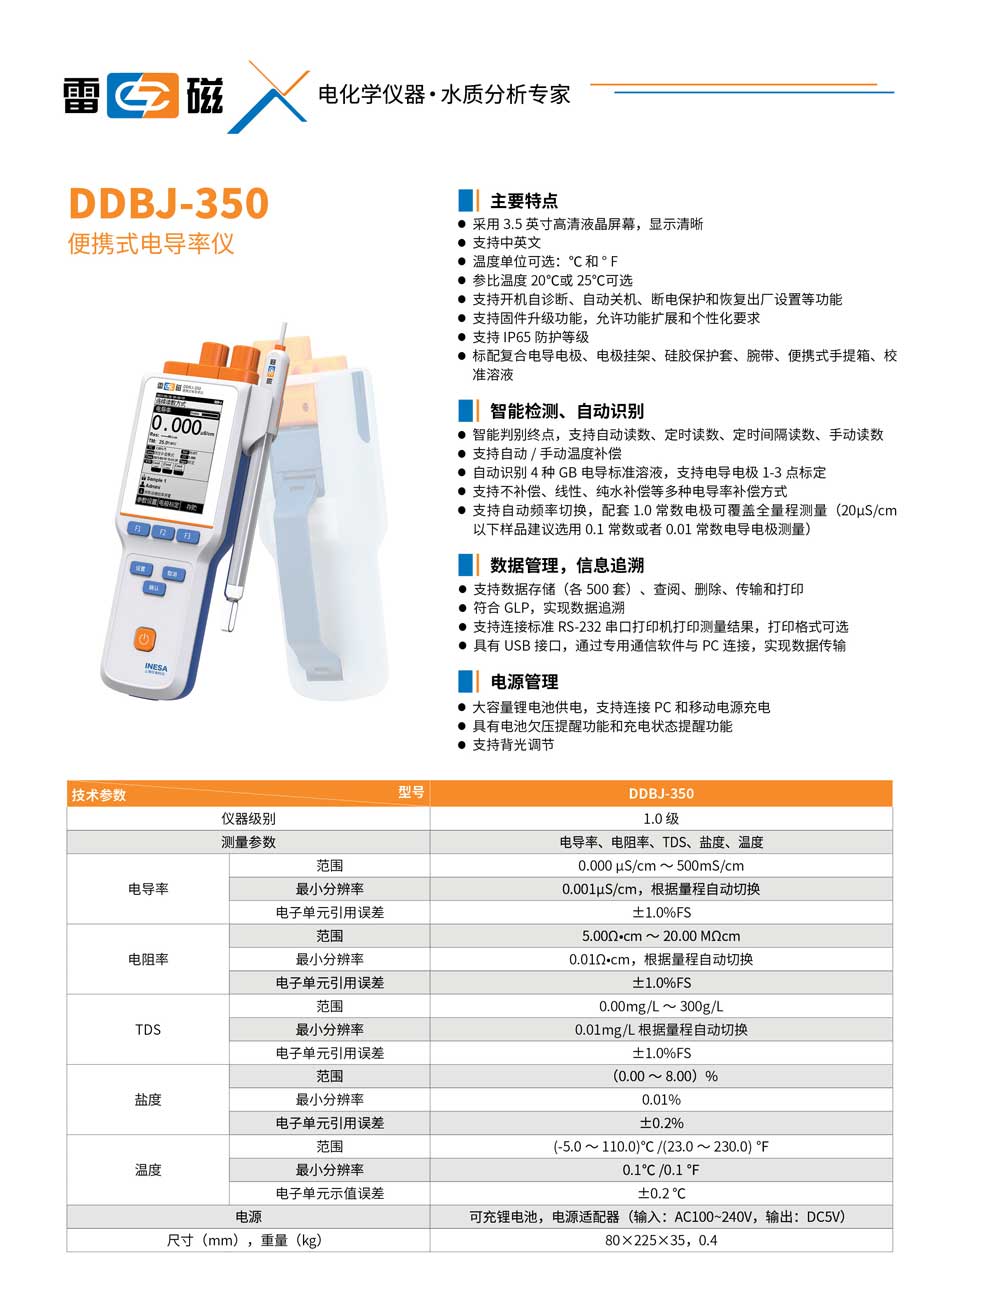 DDBJ-350-彩页.jpg